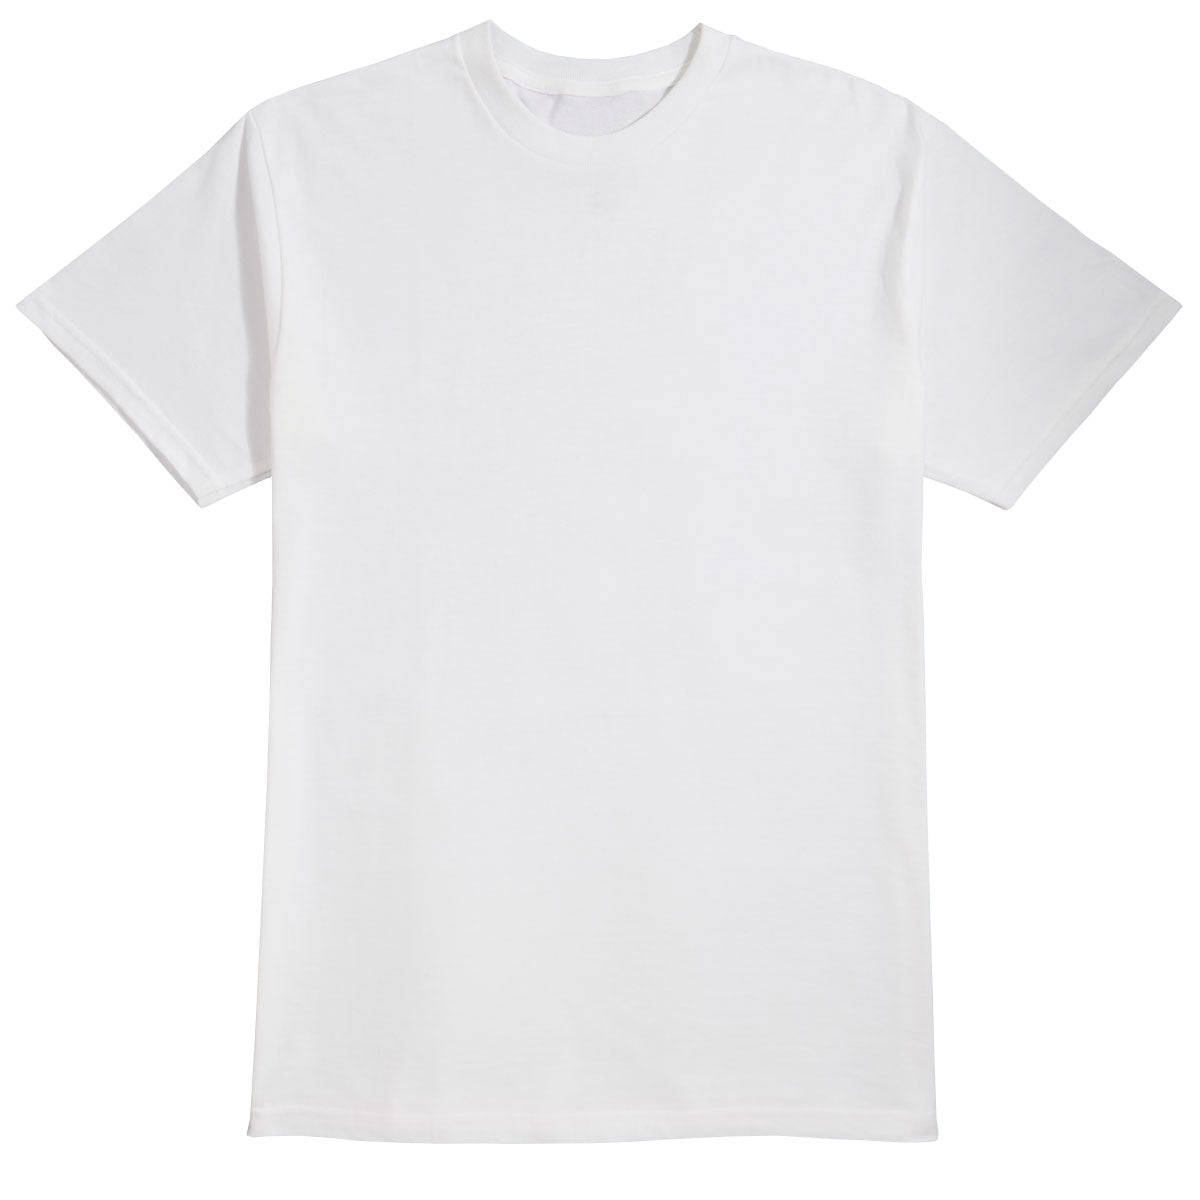 Converse Spider Web T-Shirt - White - SM image 1